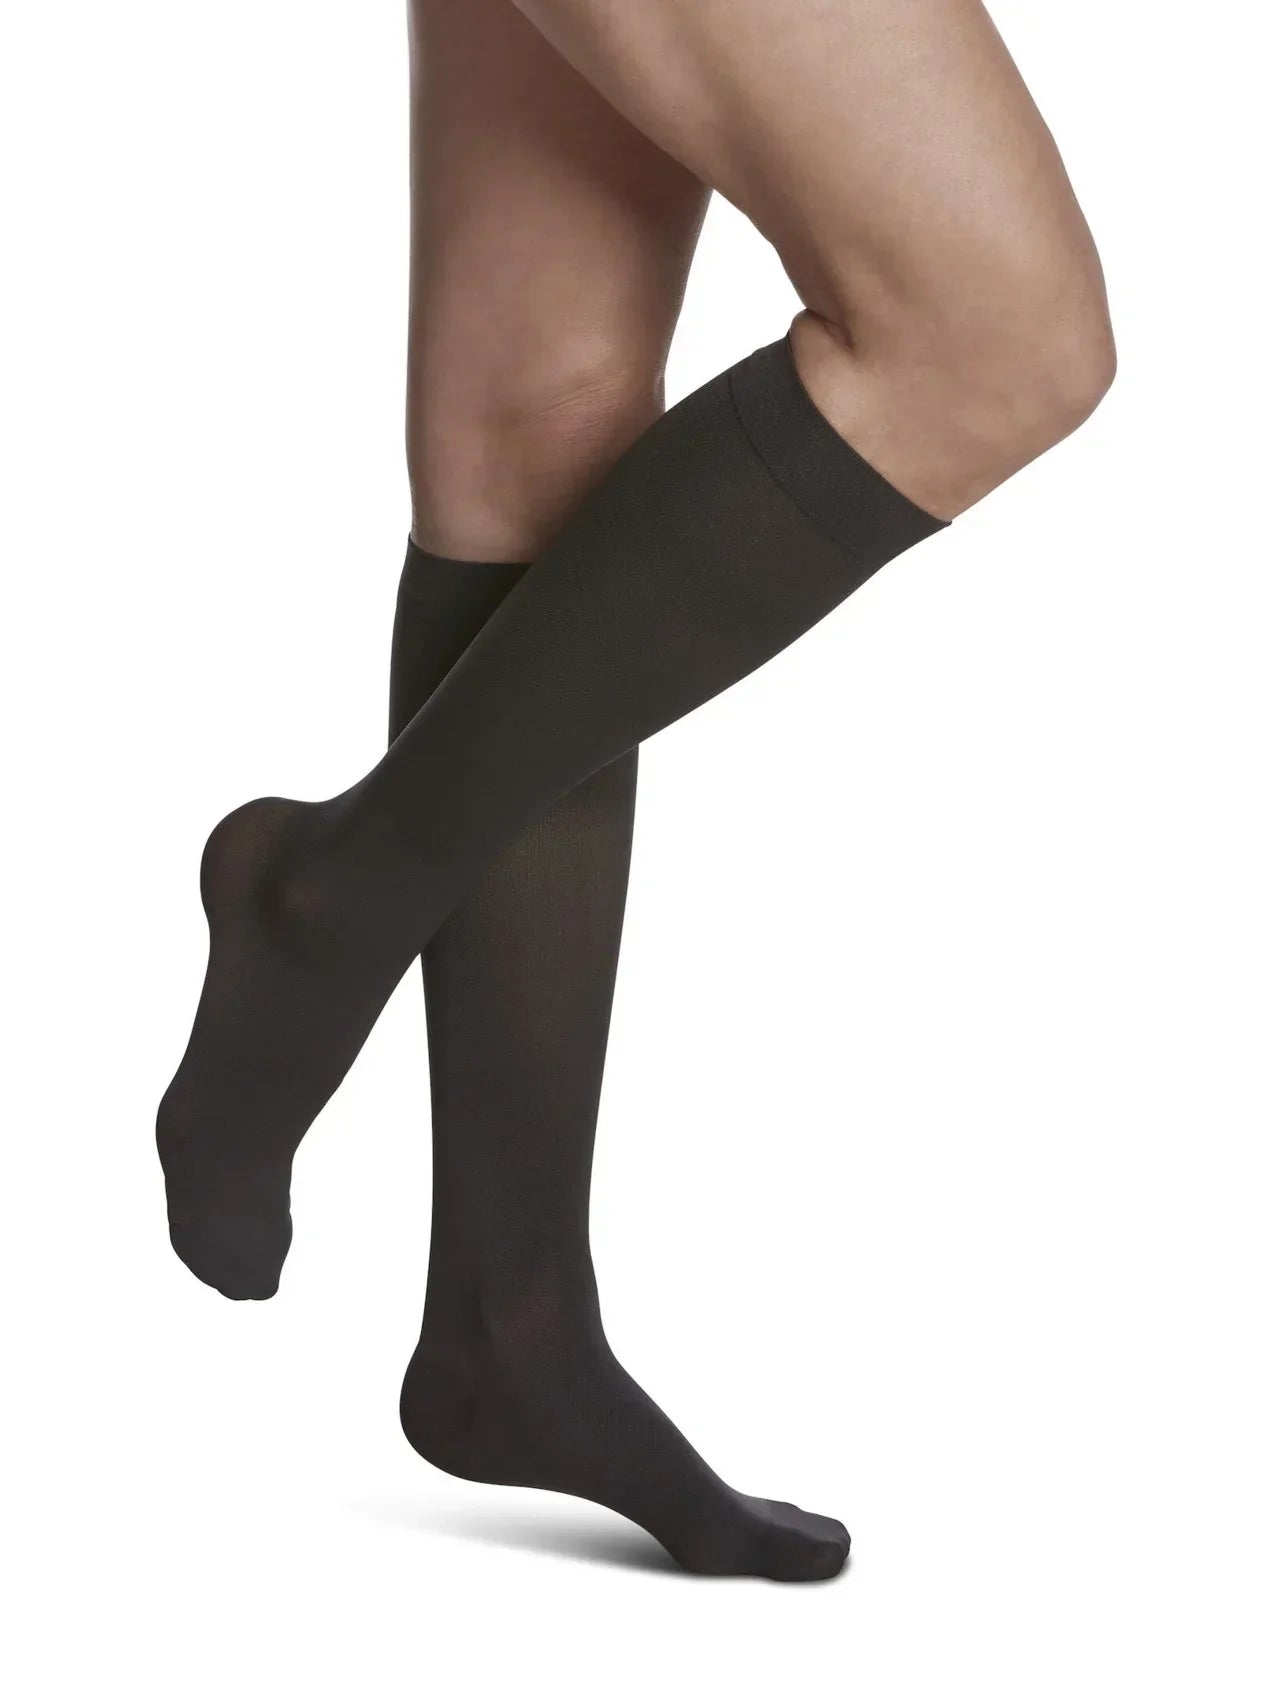 Sigvaris 840 Soft Opaque Compression Socks 30-40 mmHg Calf High for Female Closed Toe